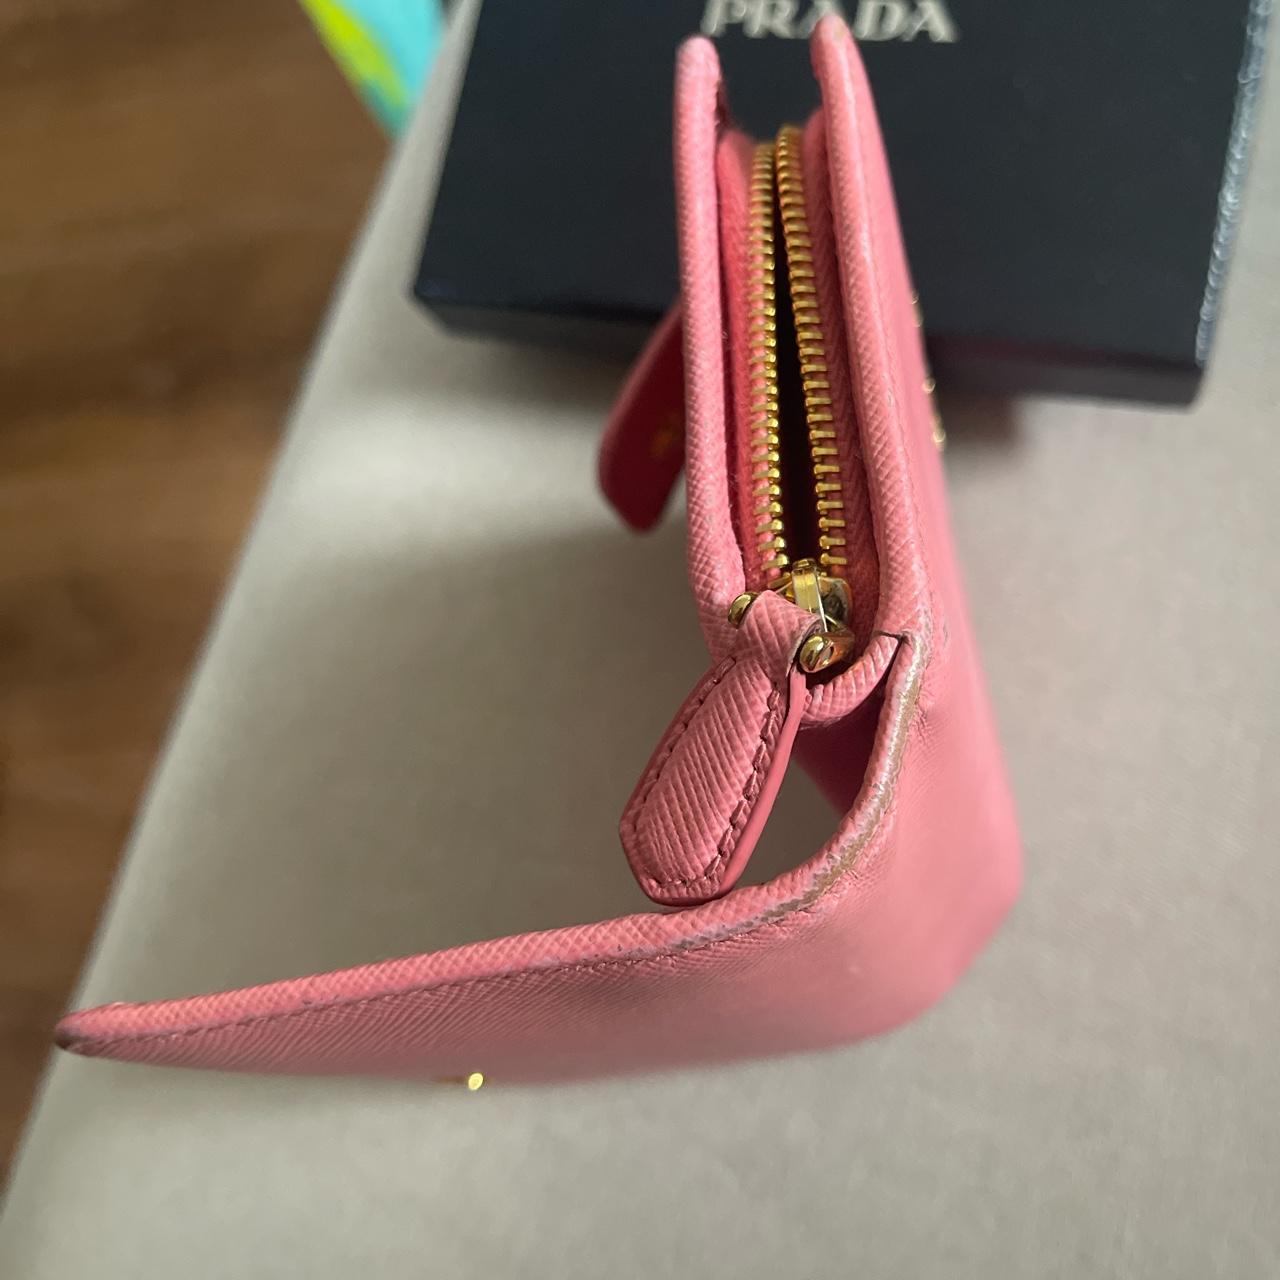 Prada Dark Pink Saffiano Leather Compact Wallet Prada